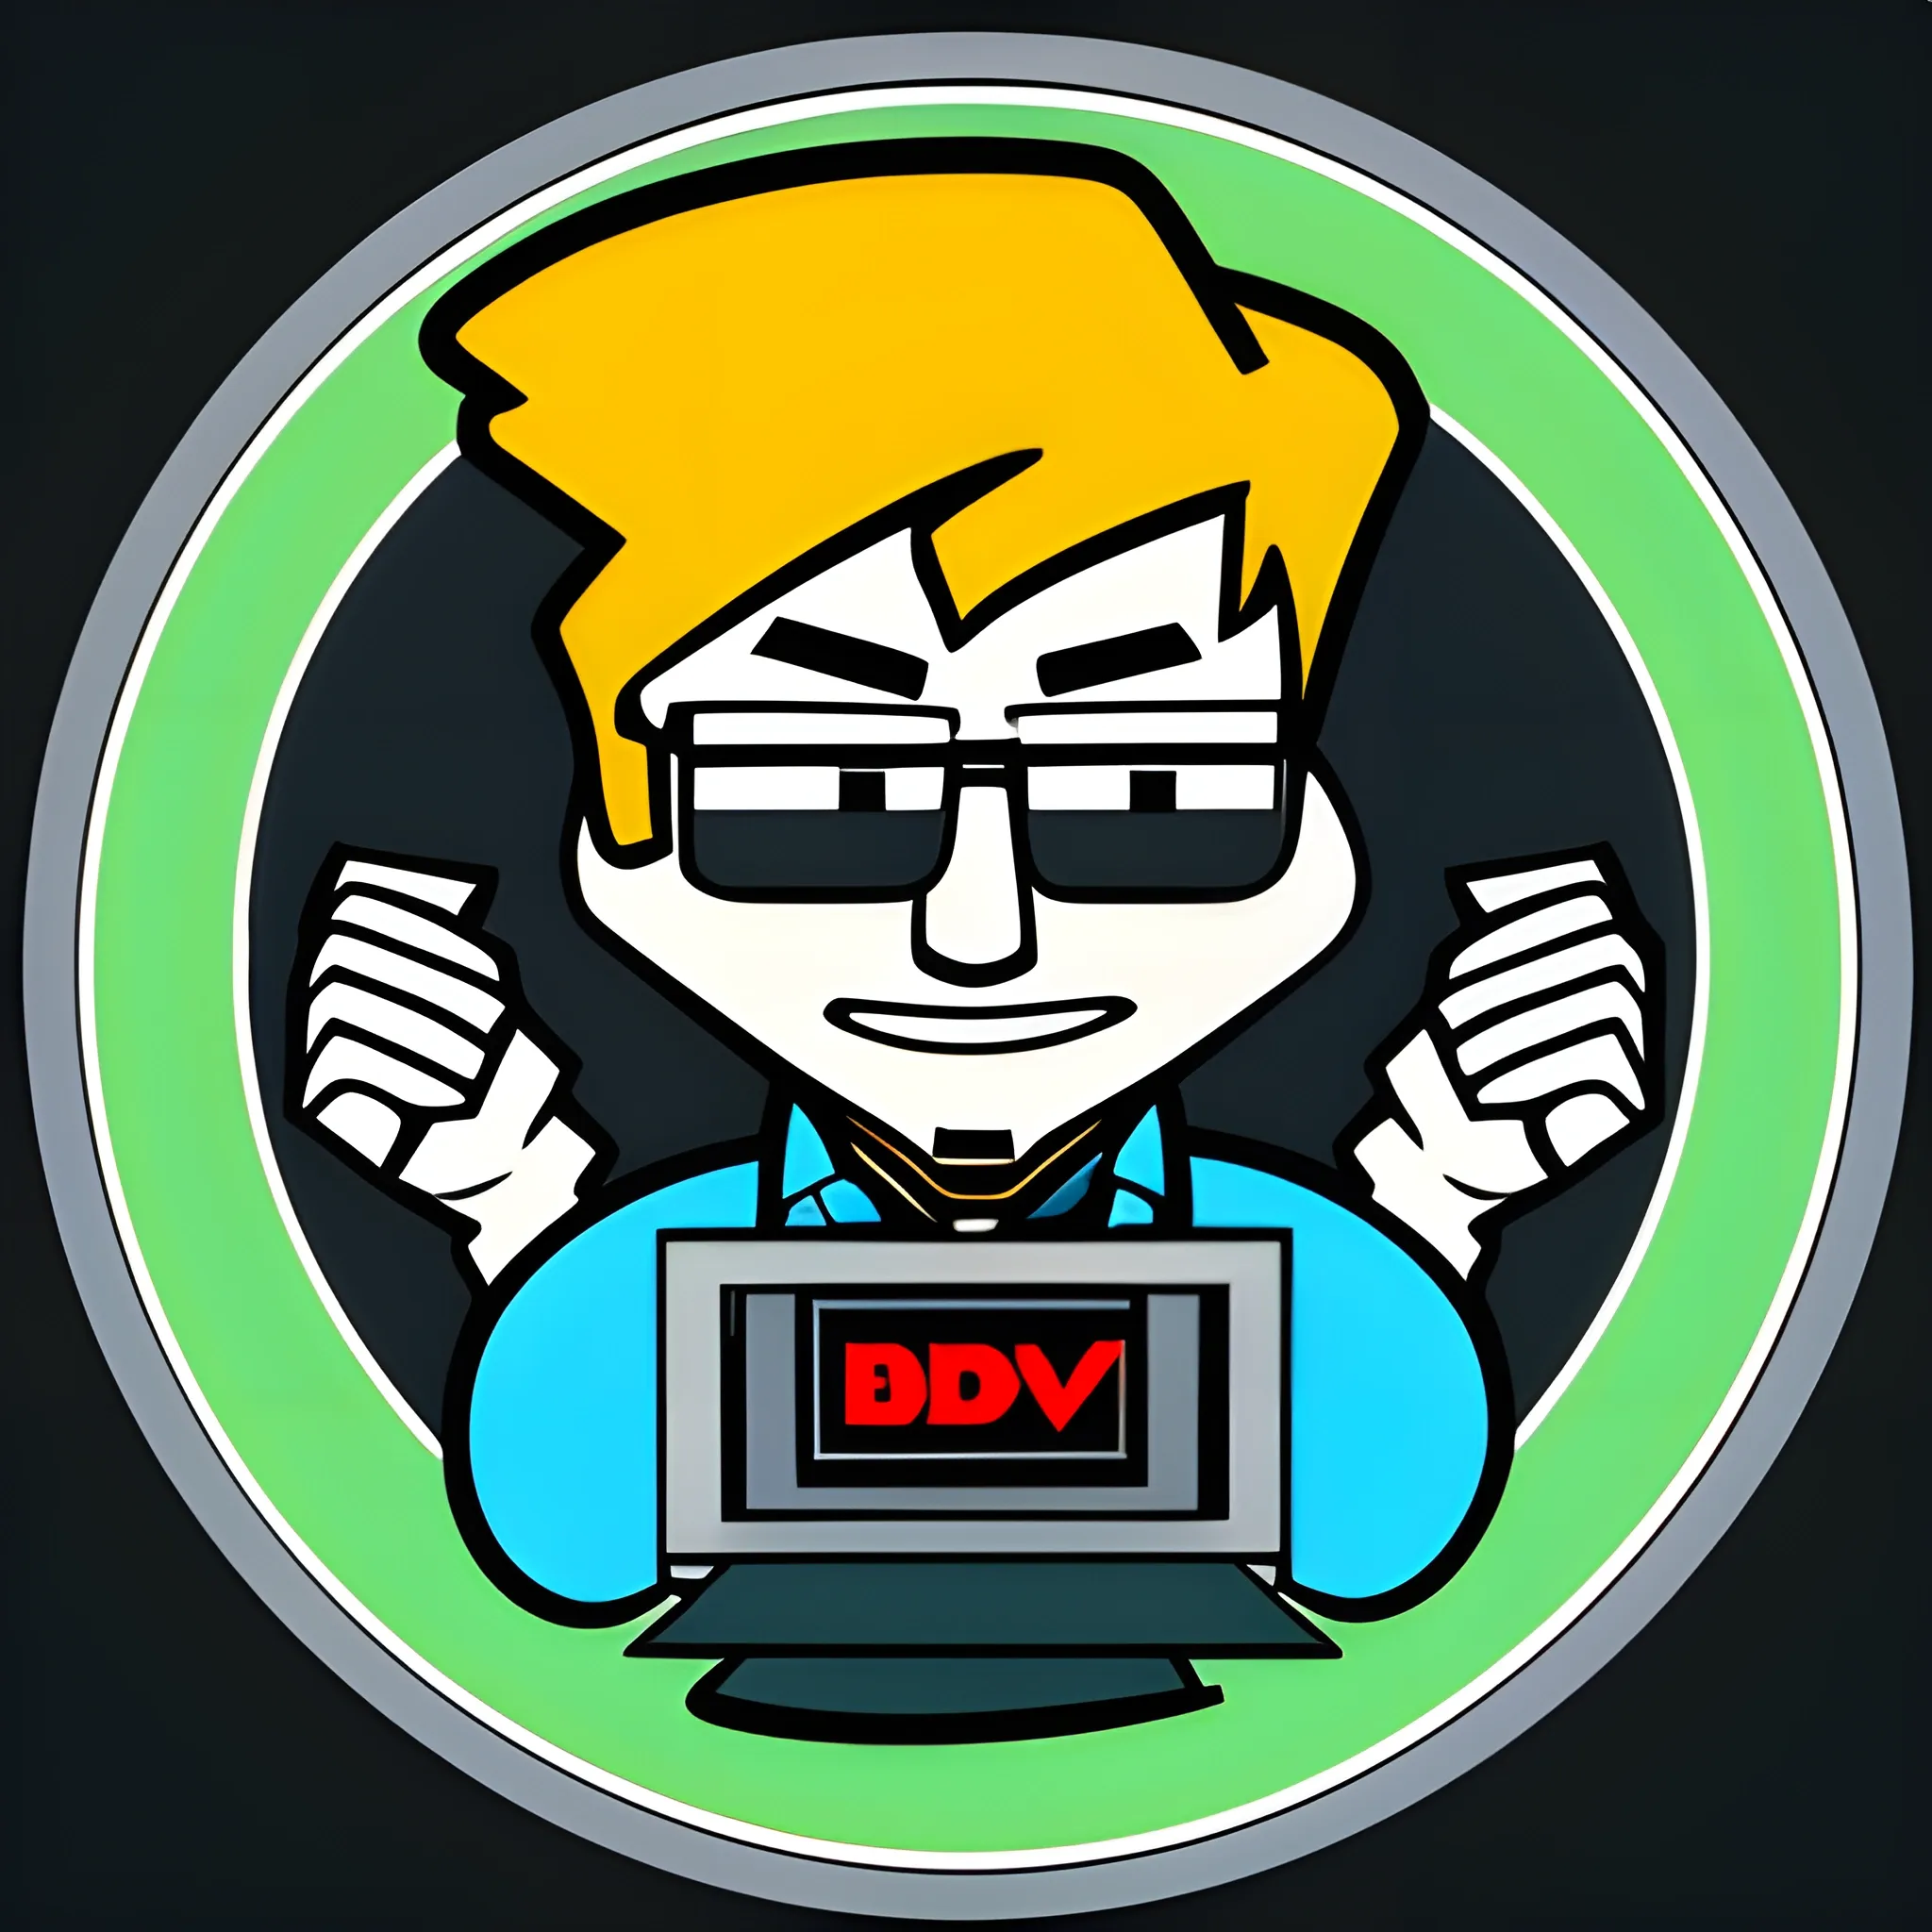 logo, with child, cartoon, with tool, computer sadboy

